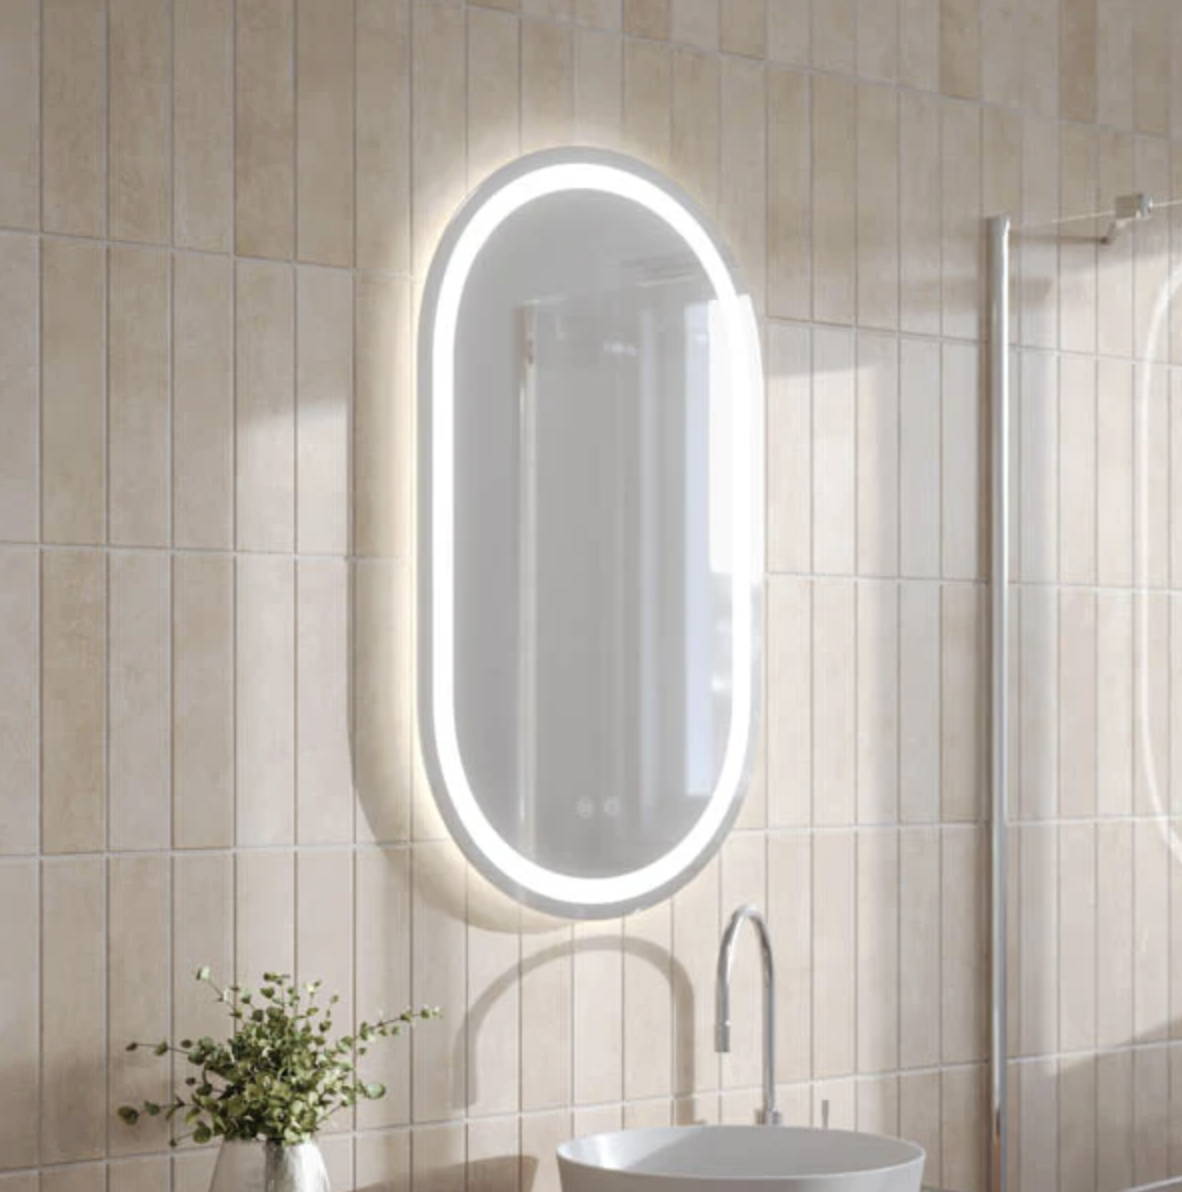 Pill shaped LED Mirror in a warm bathroom design